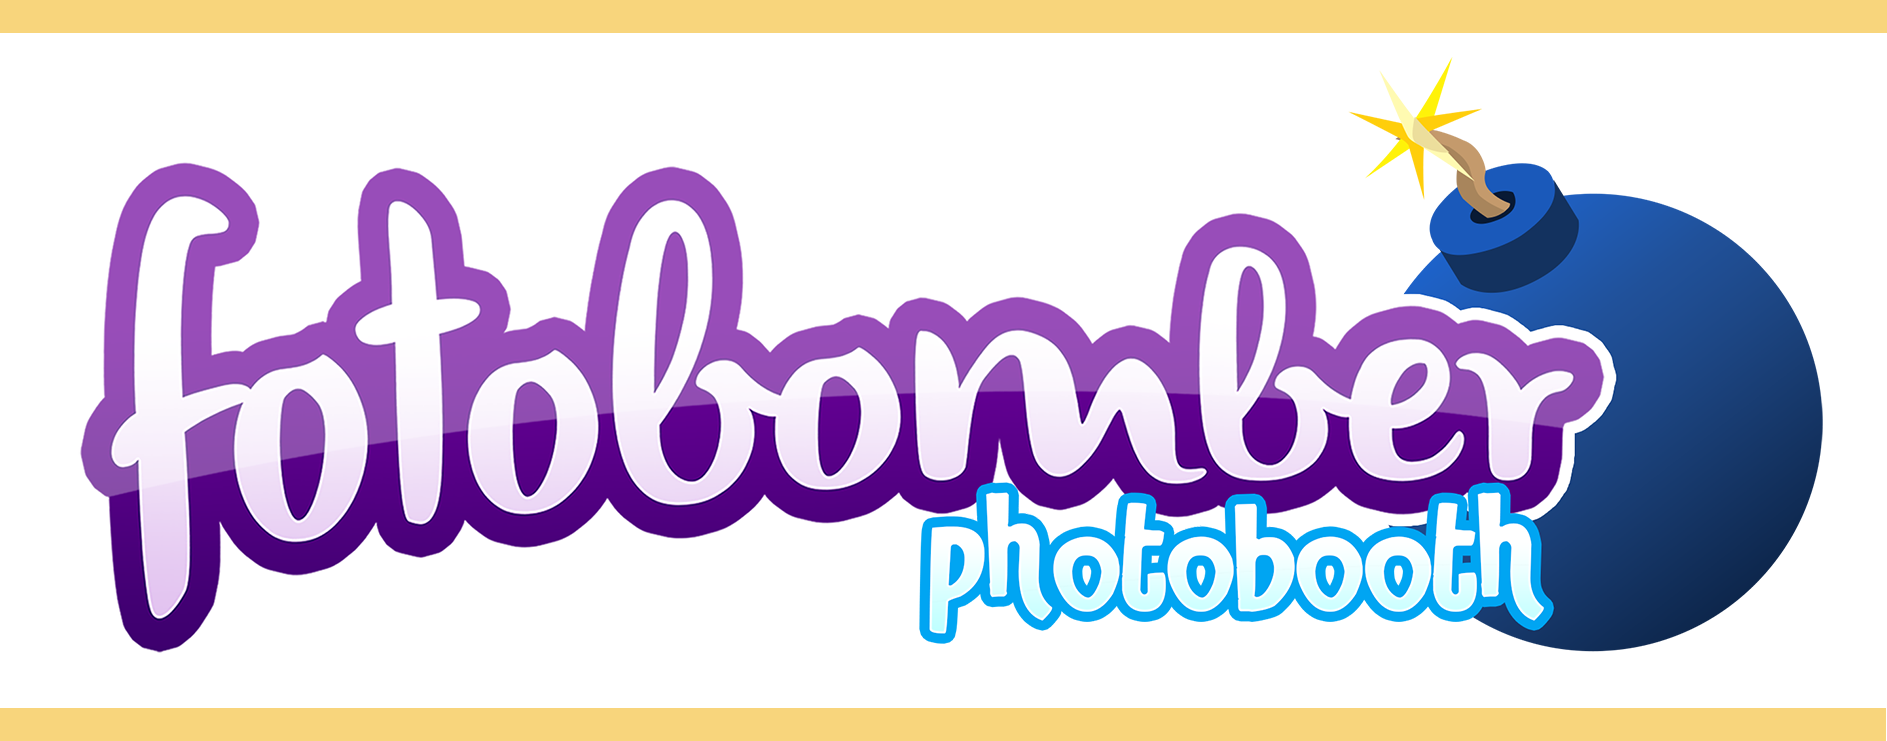 fotobomber-logo